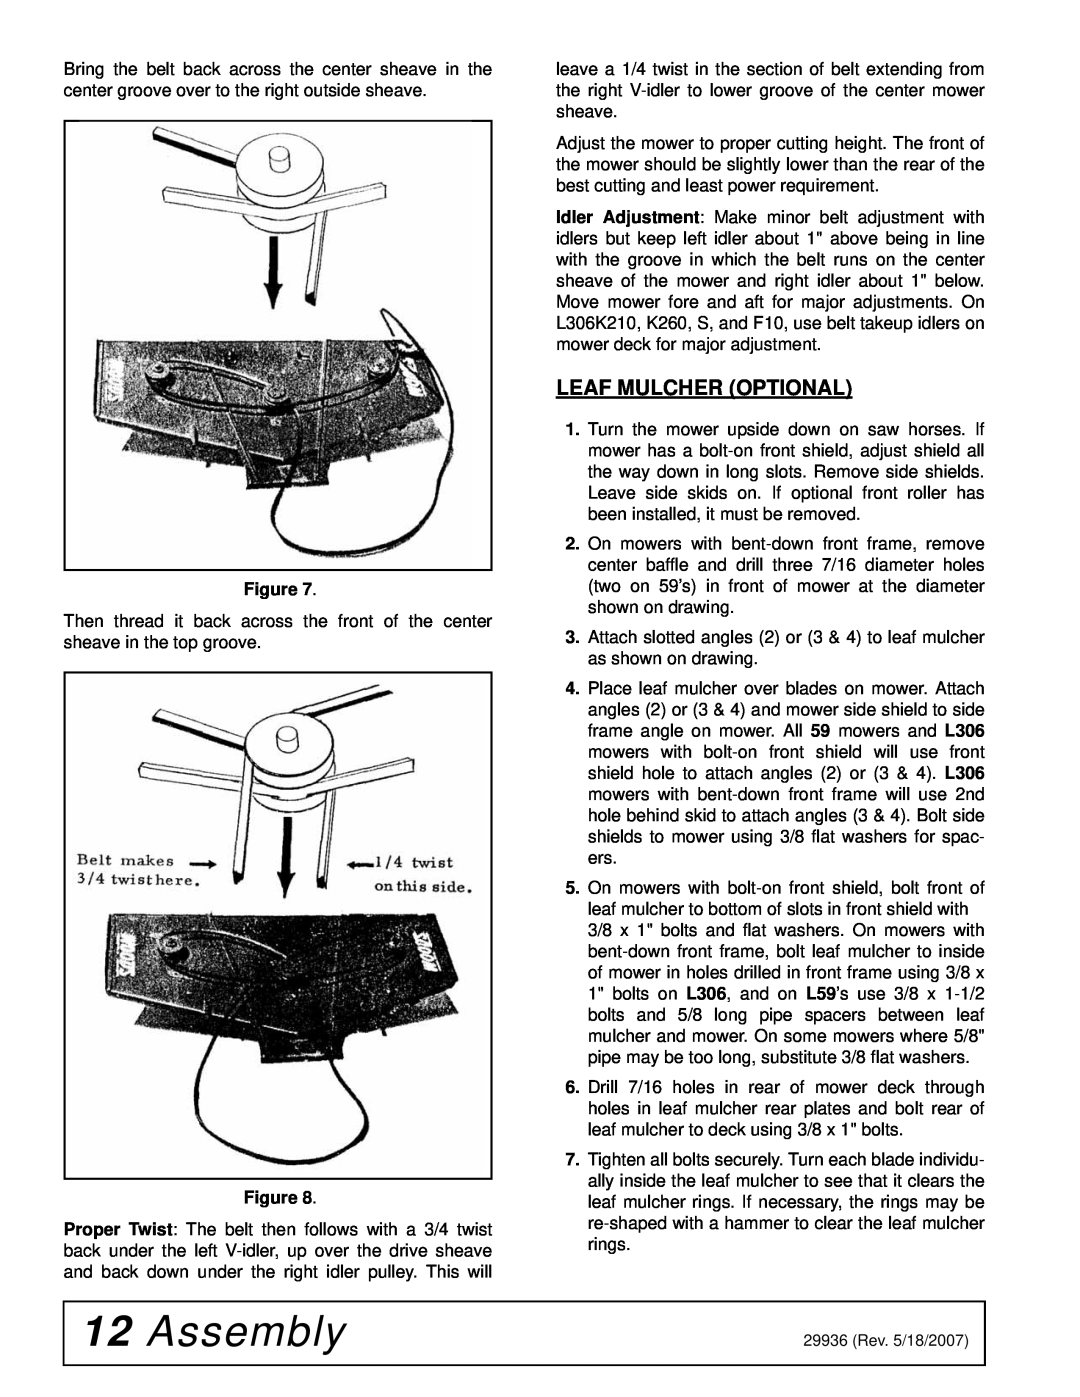 Woods Equipment L36, L59 manual Assembly, Leaf Mulcher Optional 